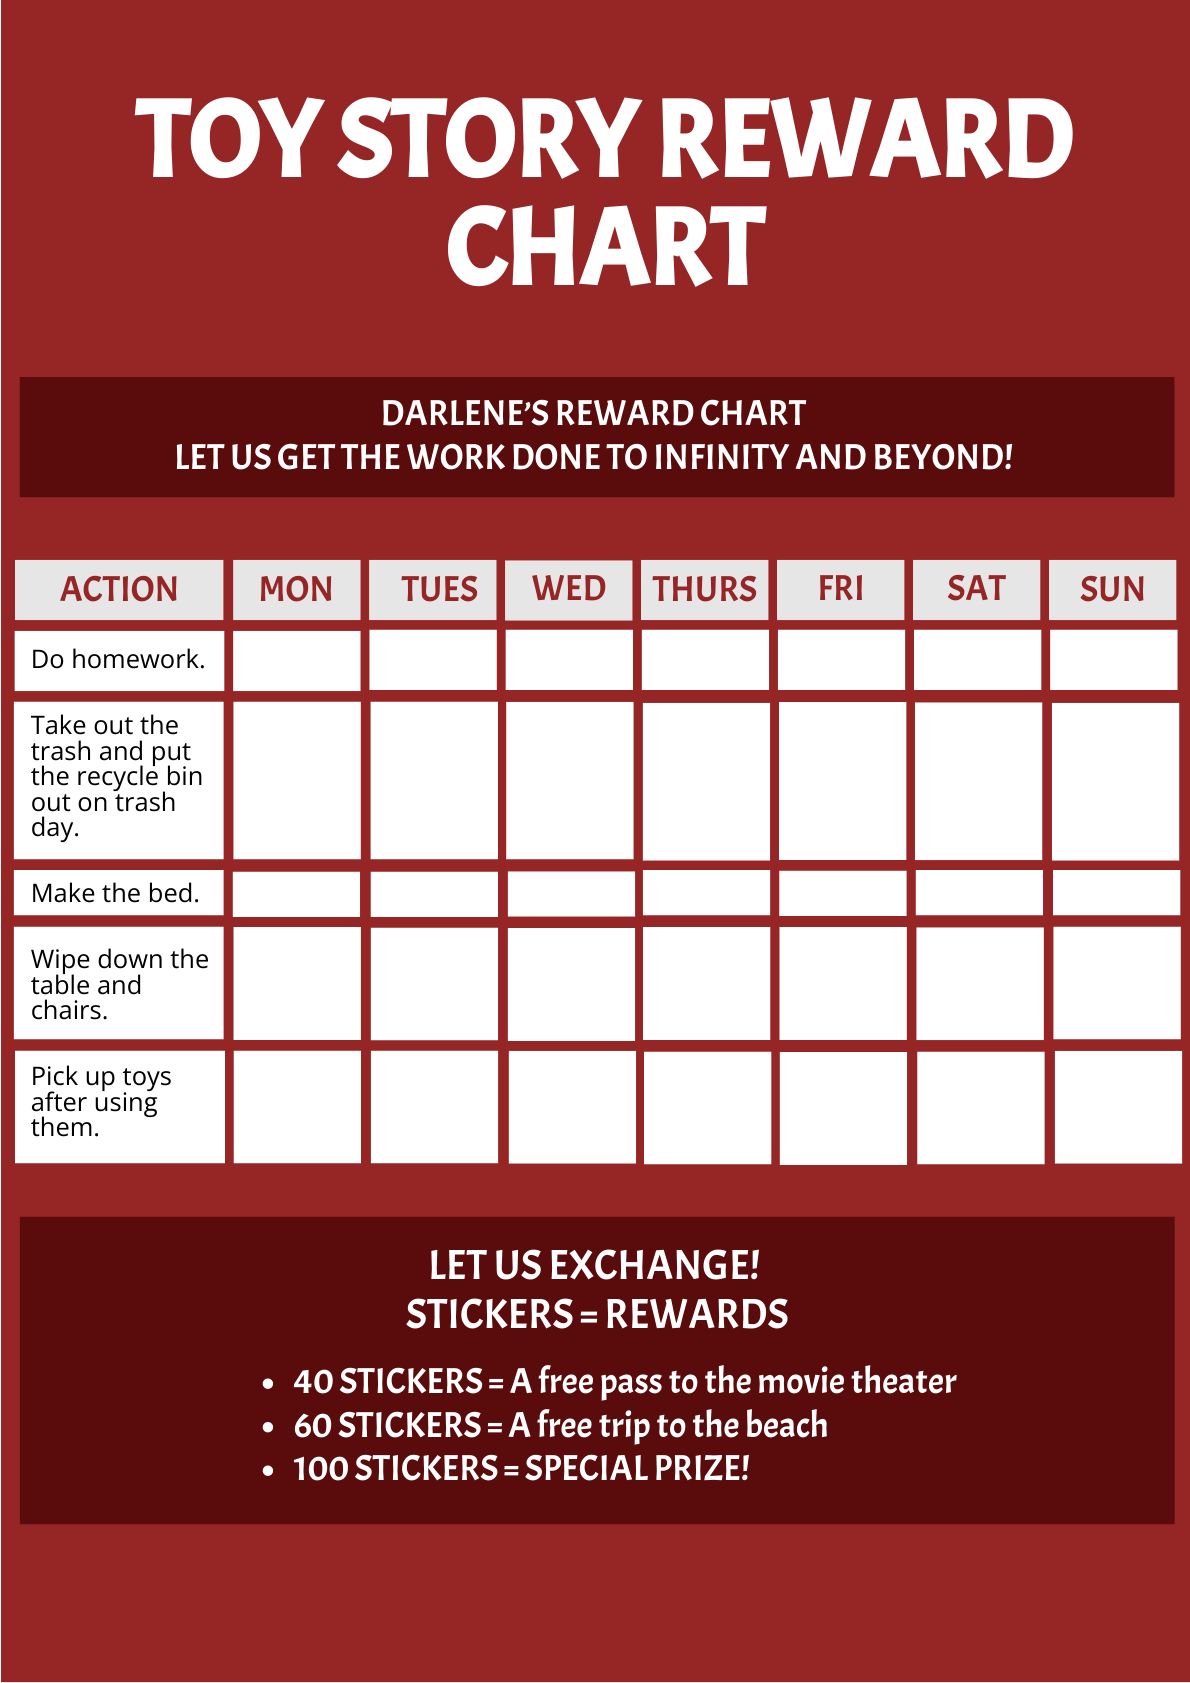 Toy Story Reward Chart in PDF, Illustrator